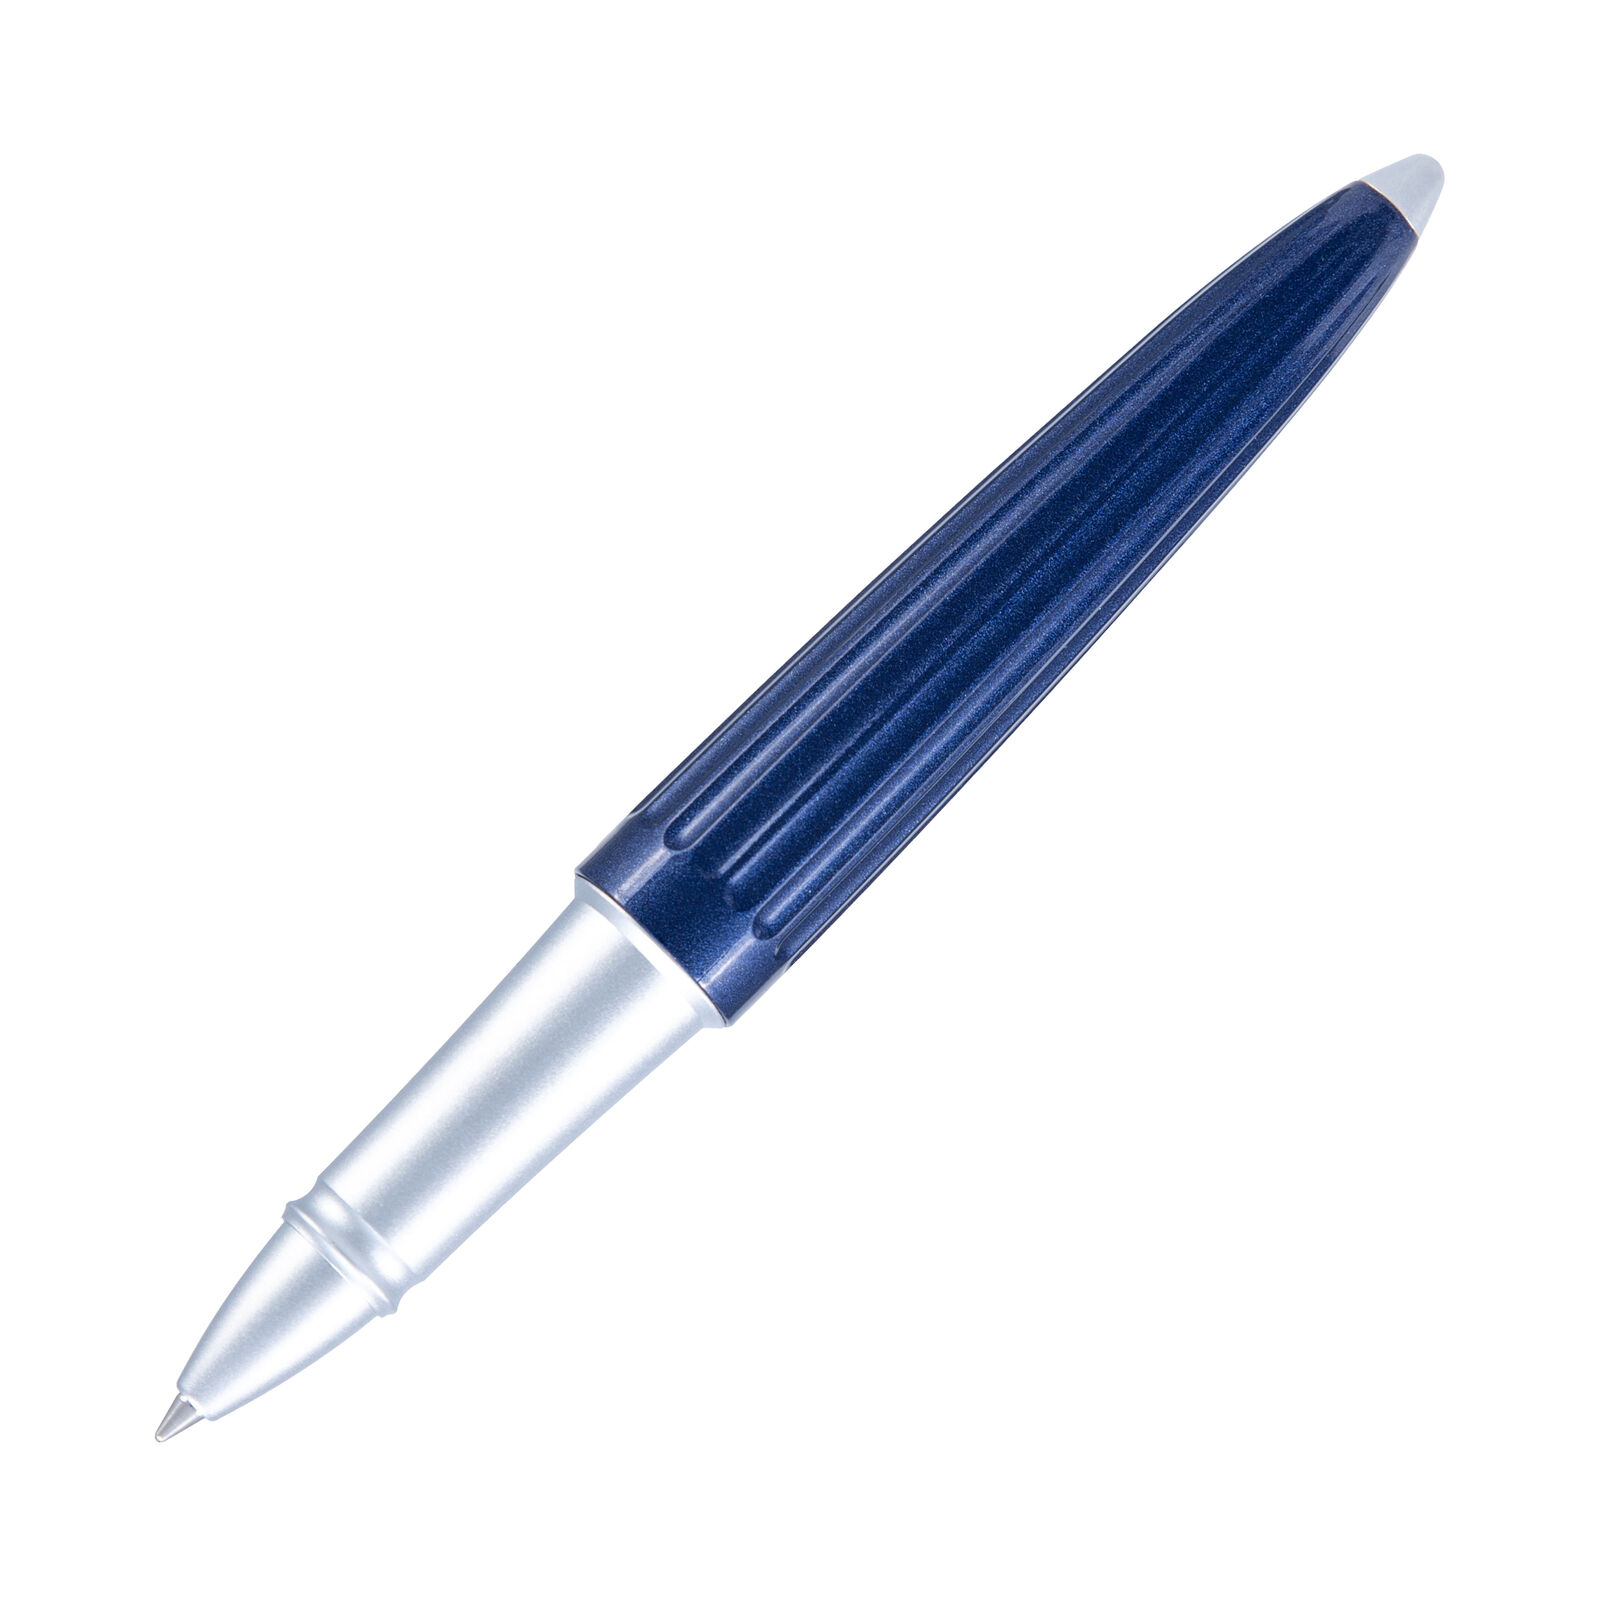 Diplomat Aero Rollerball Pen in Midnight Blue- NEW in original box